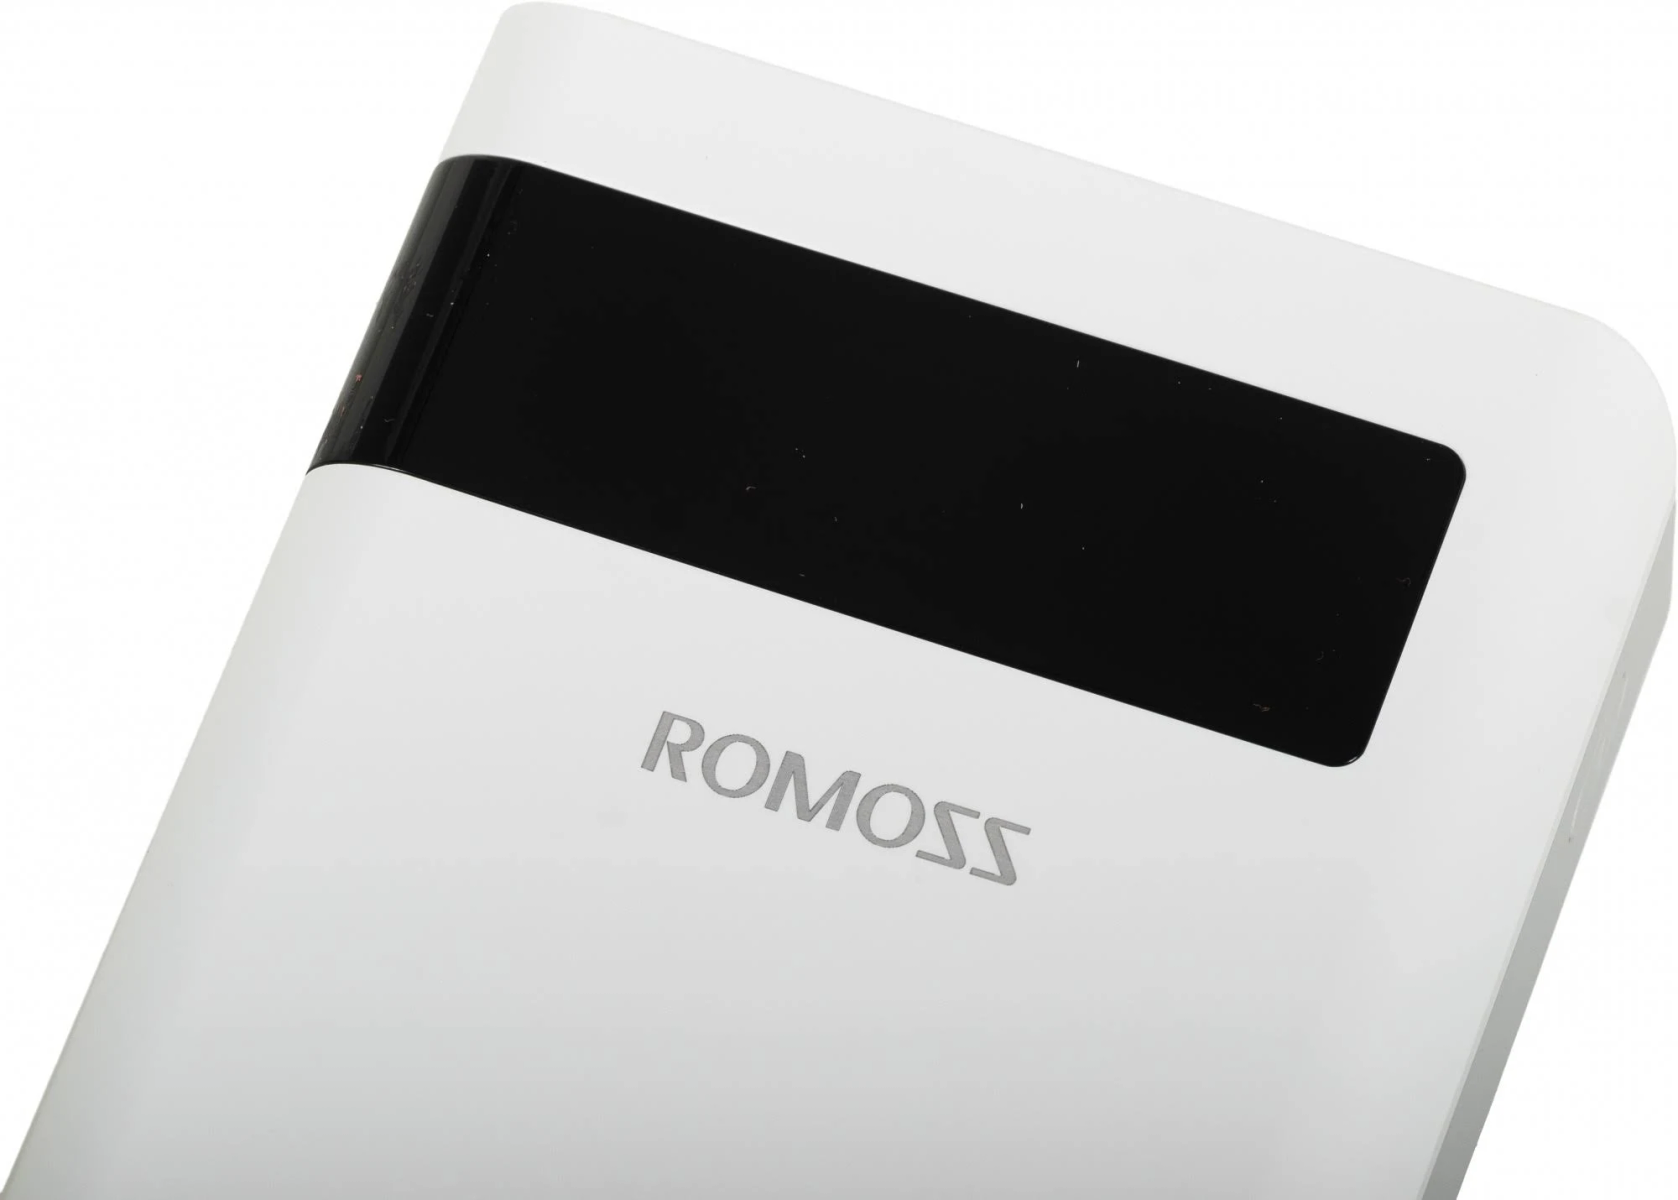 Weiß Powerbank ROMOSS P30-852-1735H 30000